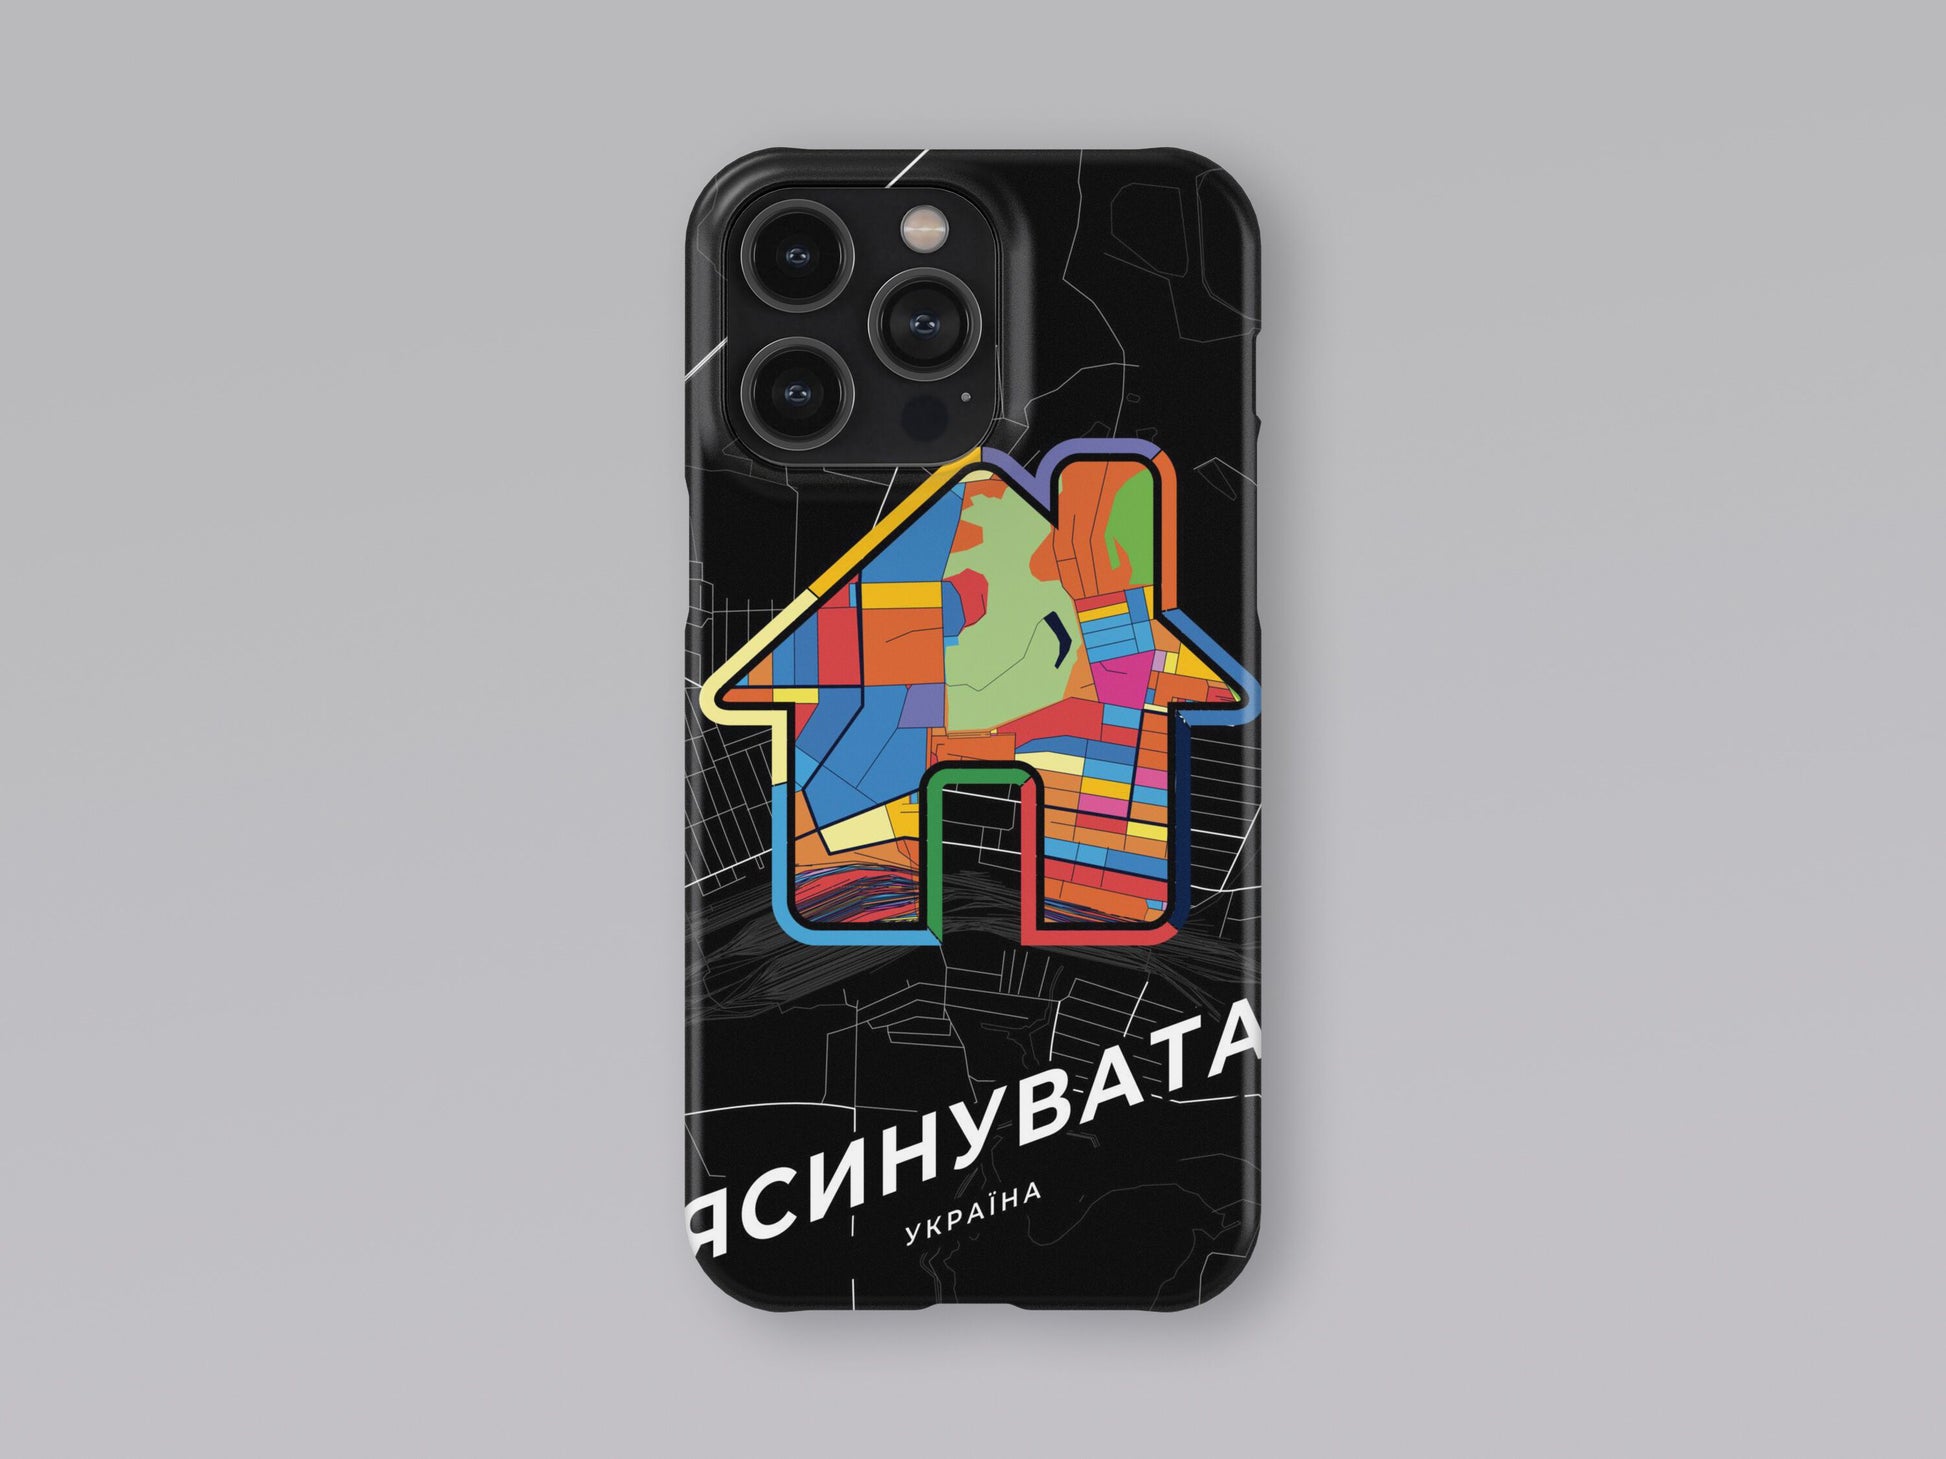 Yasynuvata Ukraine slim phone case with colorful icon 3